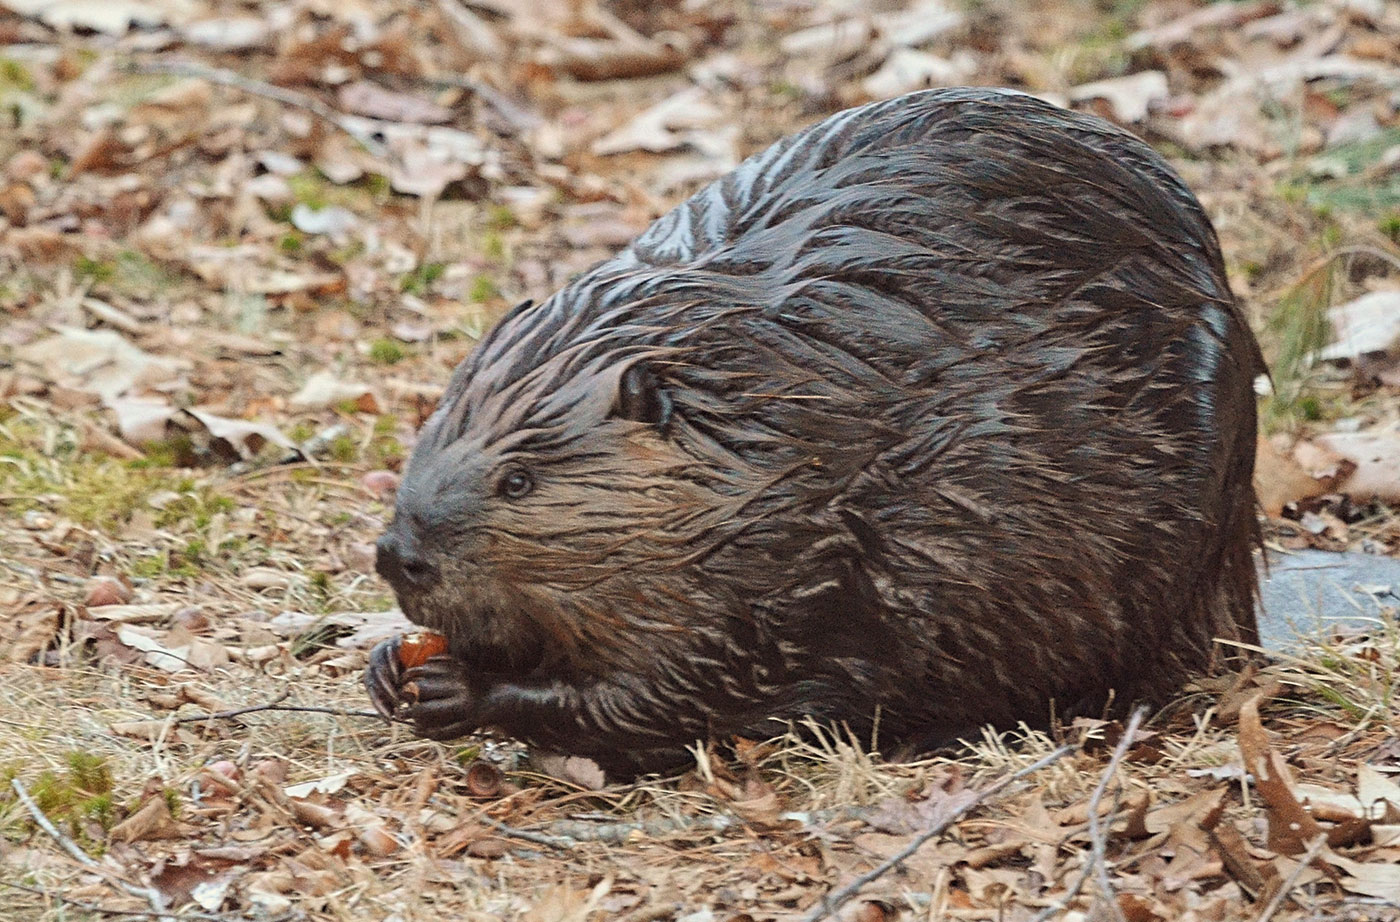 beaver eating an acorn